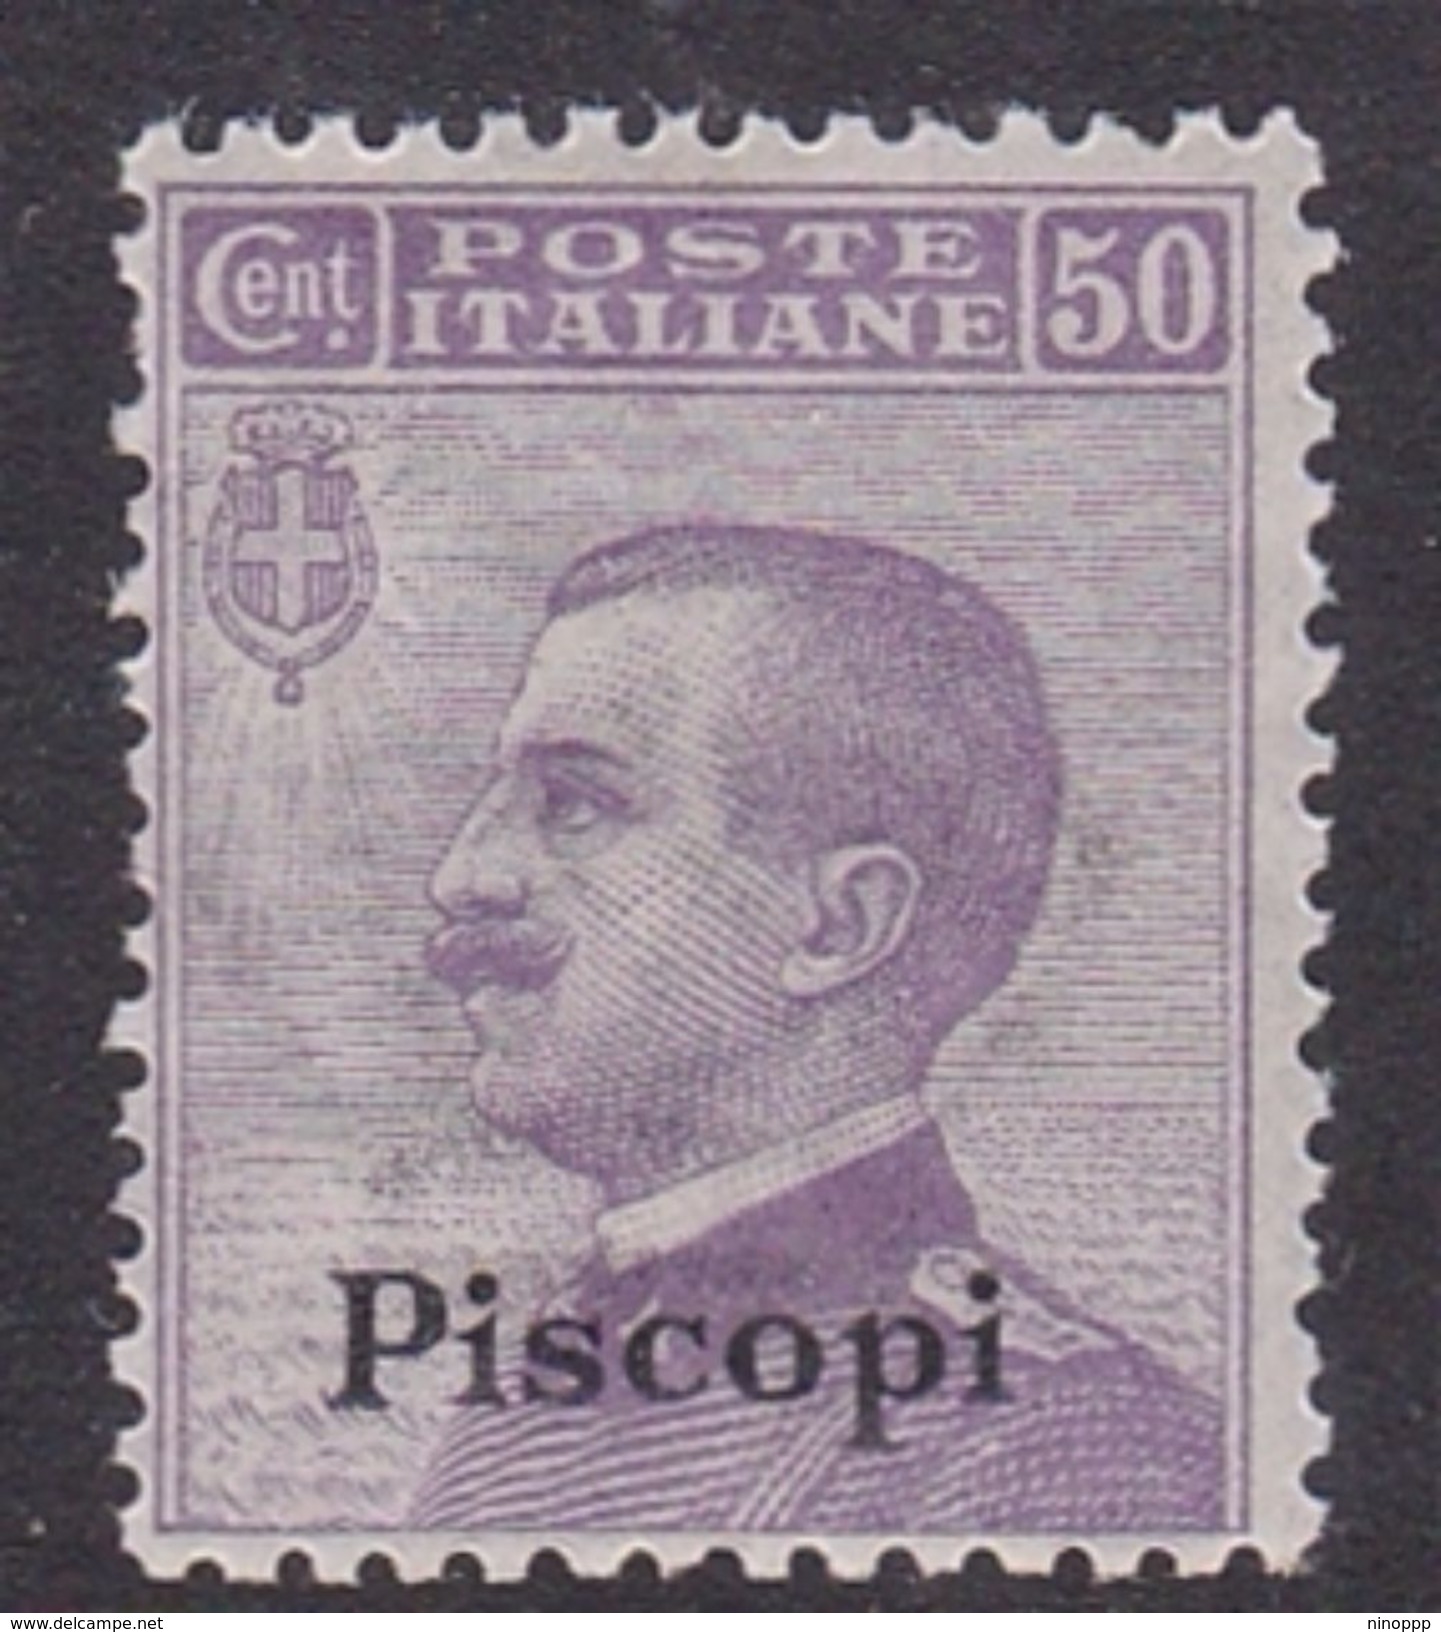 Italy-Colonies And Territories-Aegean-Piscopi S 7  1912 50c Violet MNH - Egée (Piscopi)